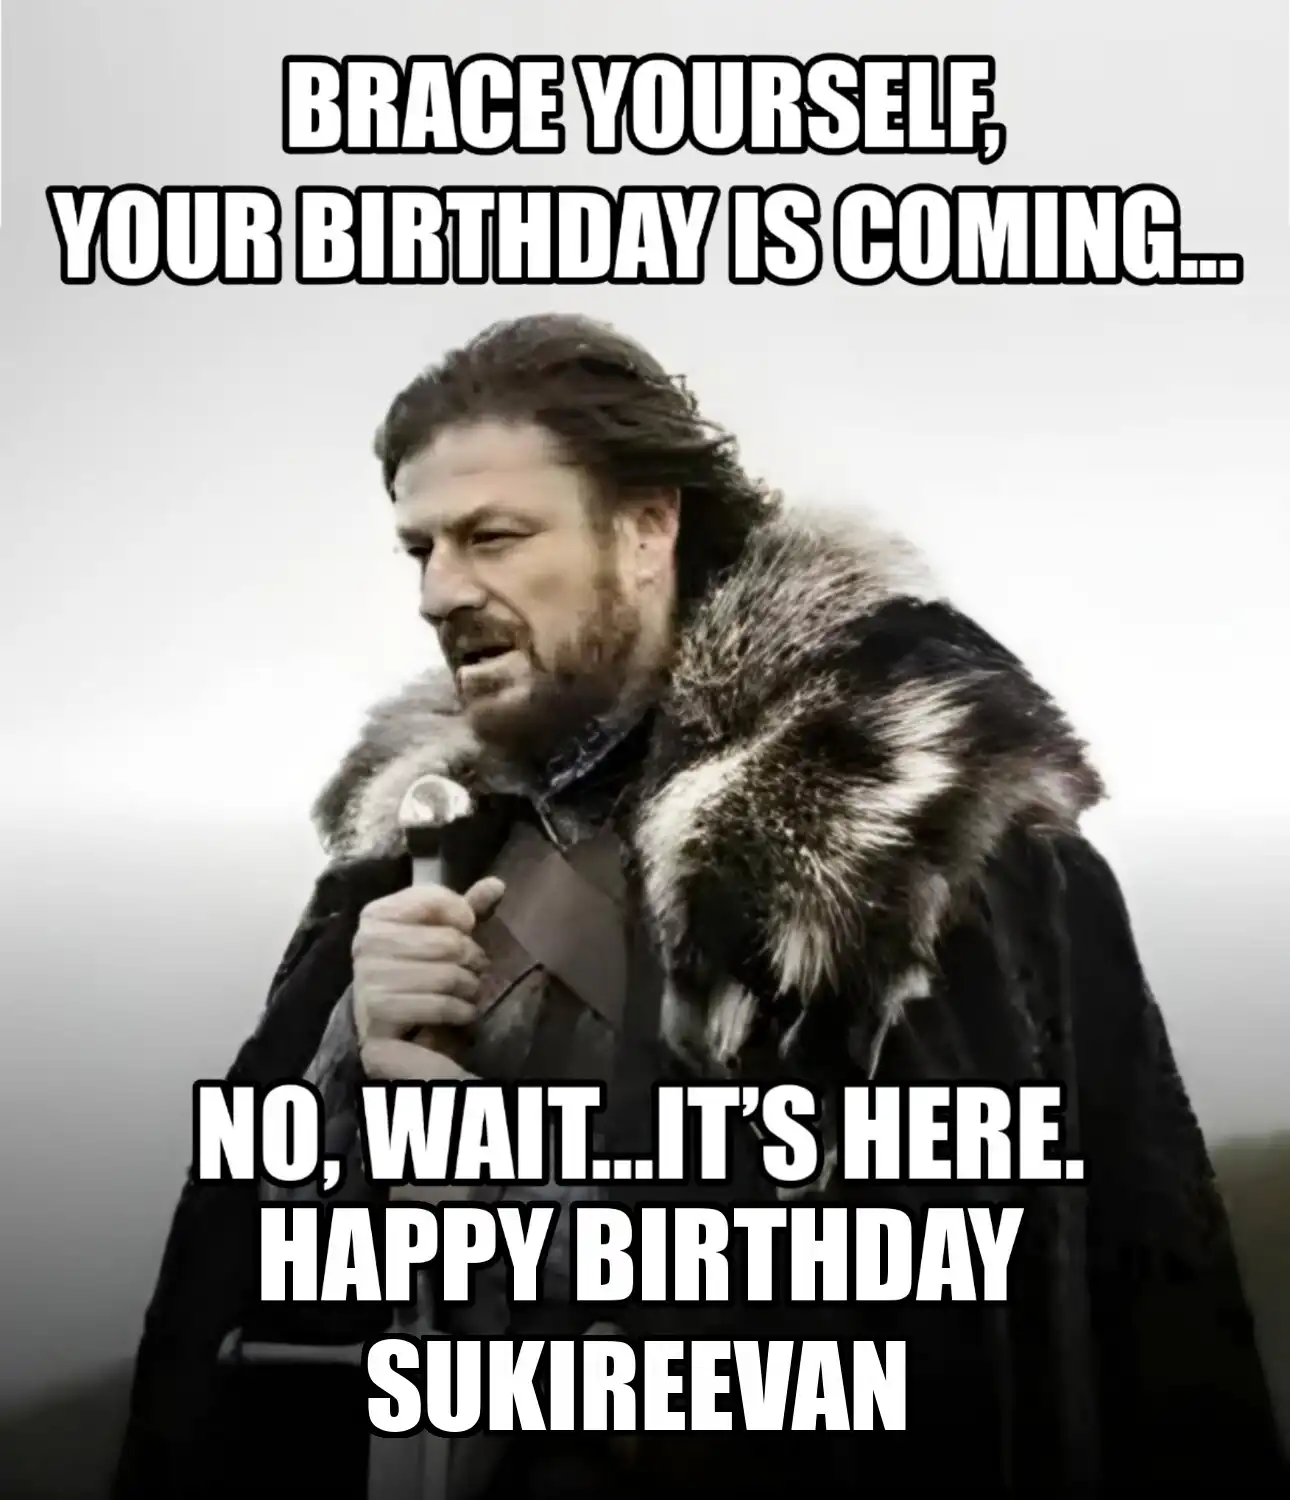 Happy Birthday Sukireevan Brace Yourself Your Birthday Is Coming Meme